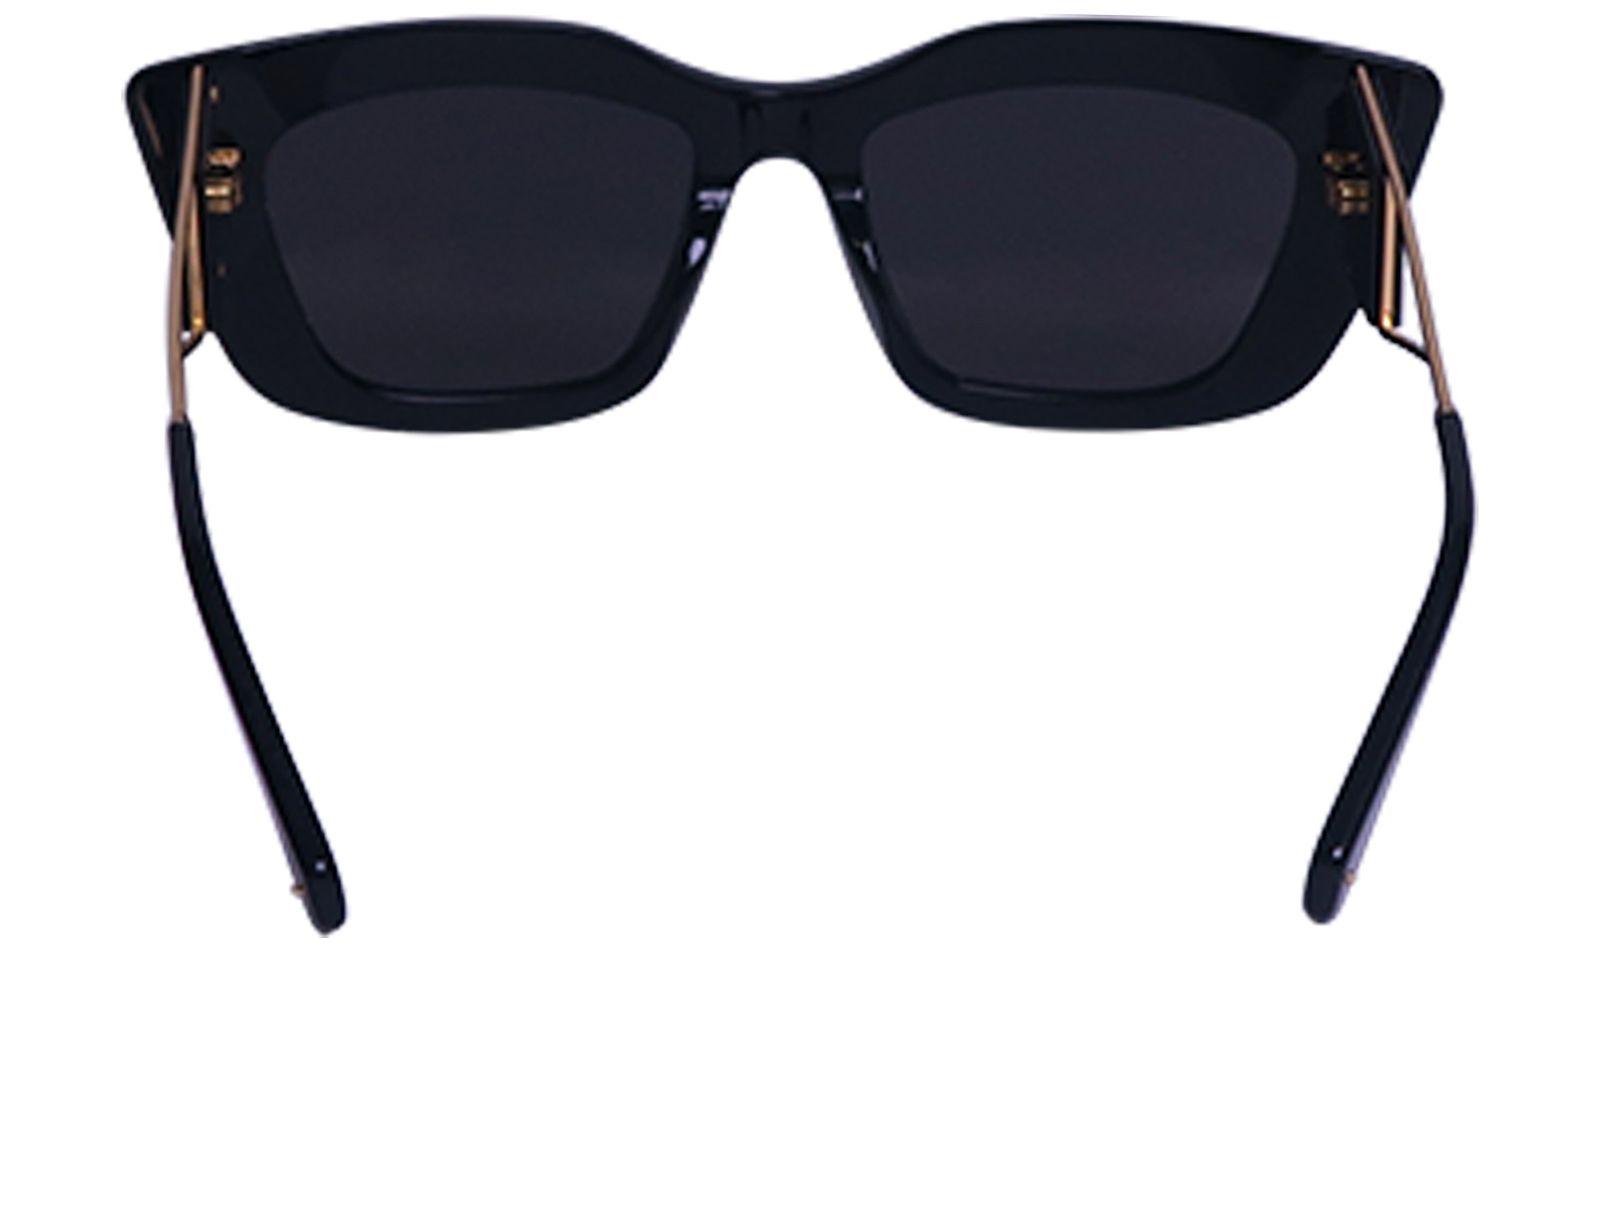 Louis Vuitton Arizona Dream Sunglasses in Black - The Royal Couturier